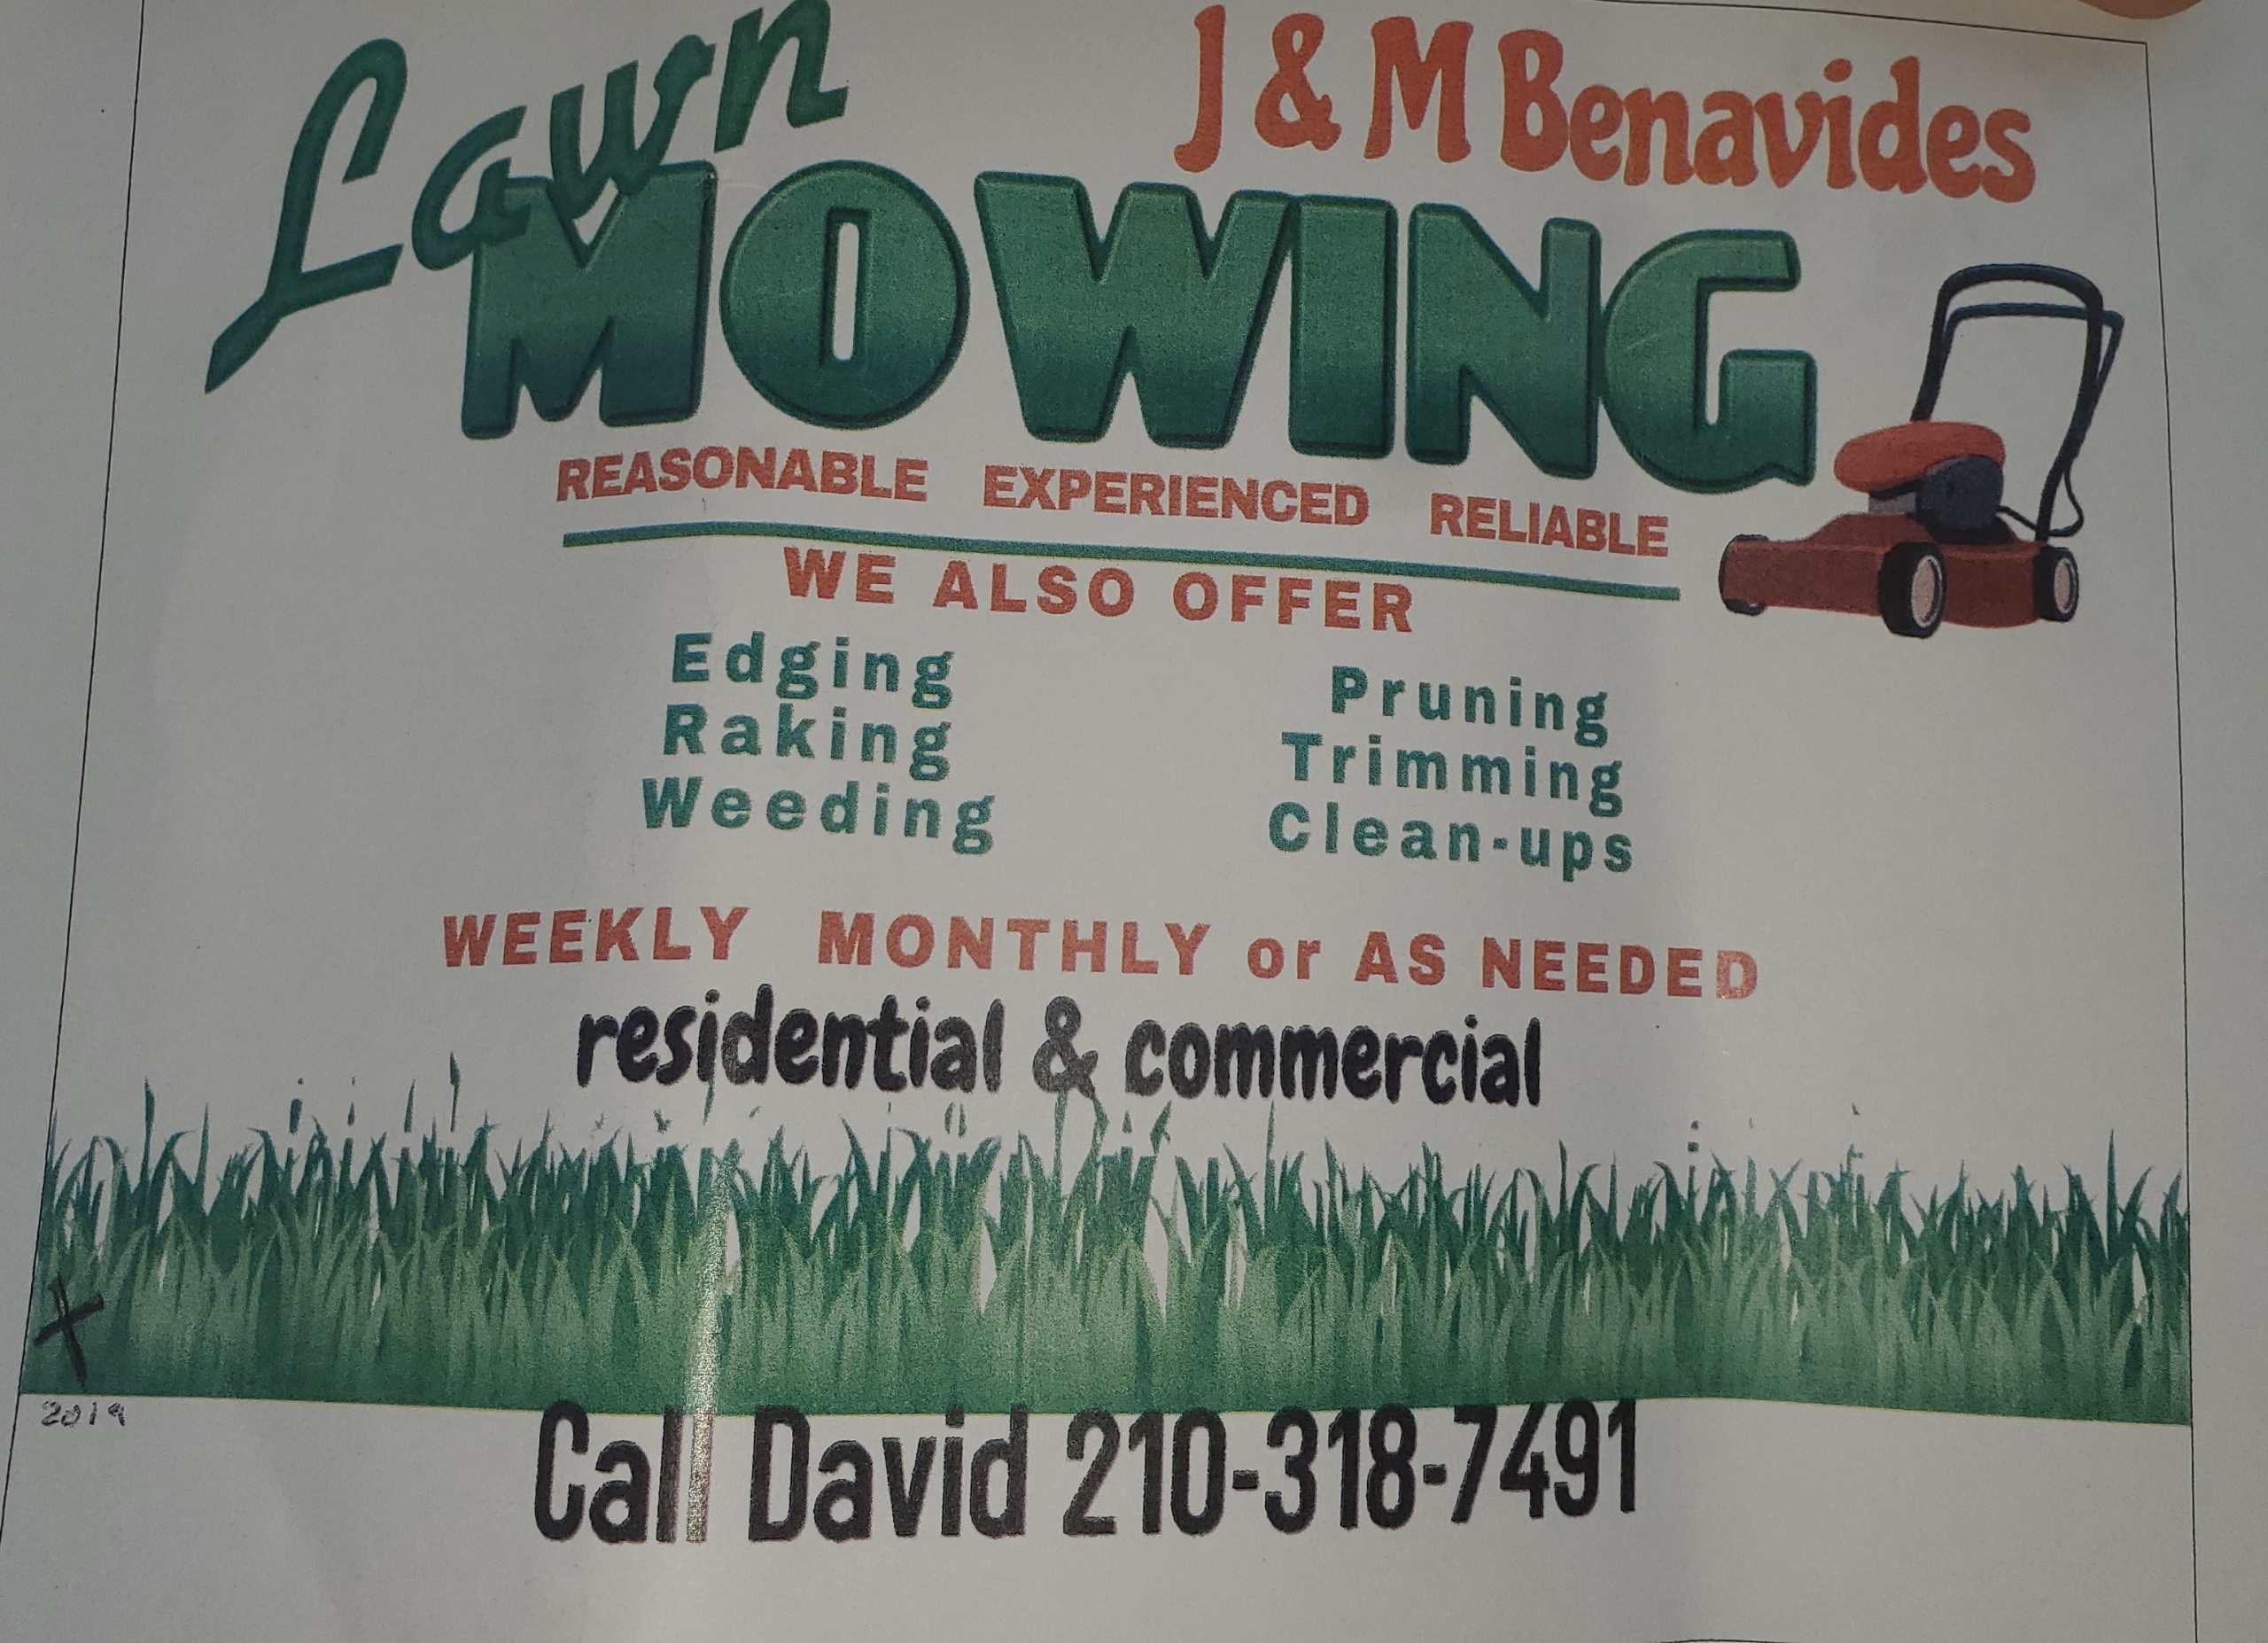 J&M Benavides Landscaping Logo